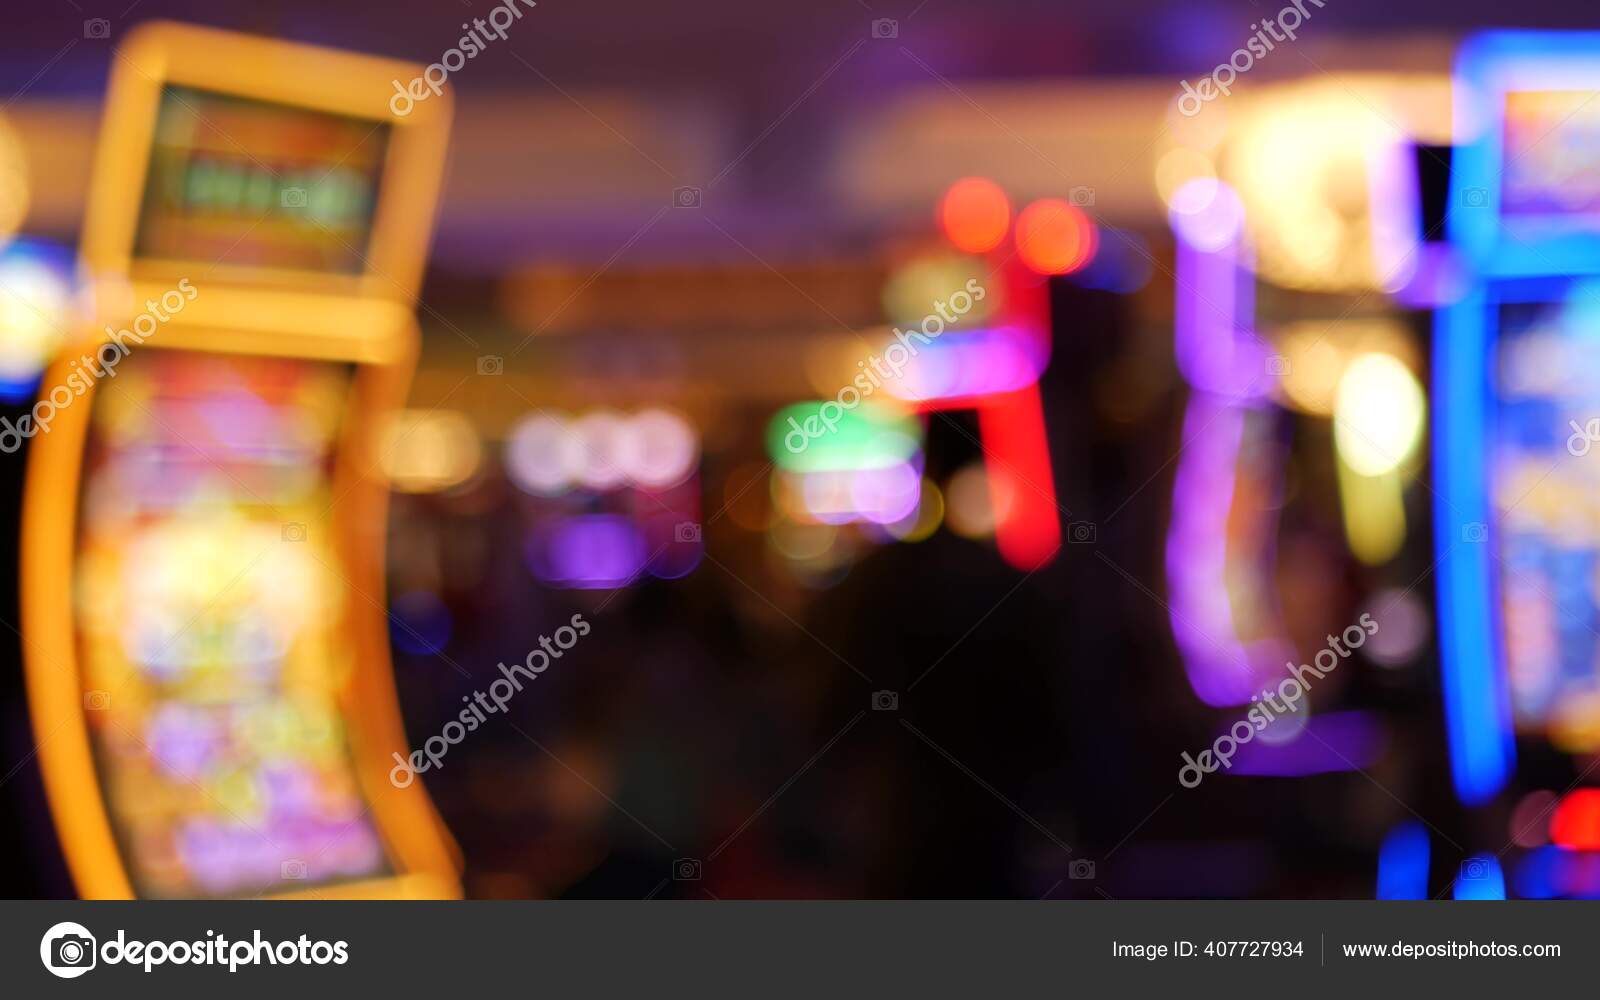 Fruit machine casino slots slot hi-res stock photography and